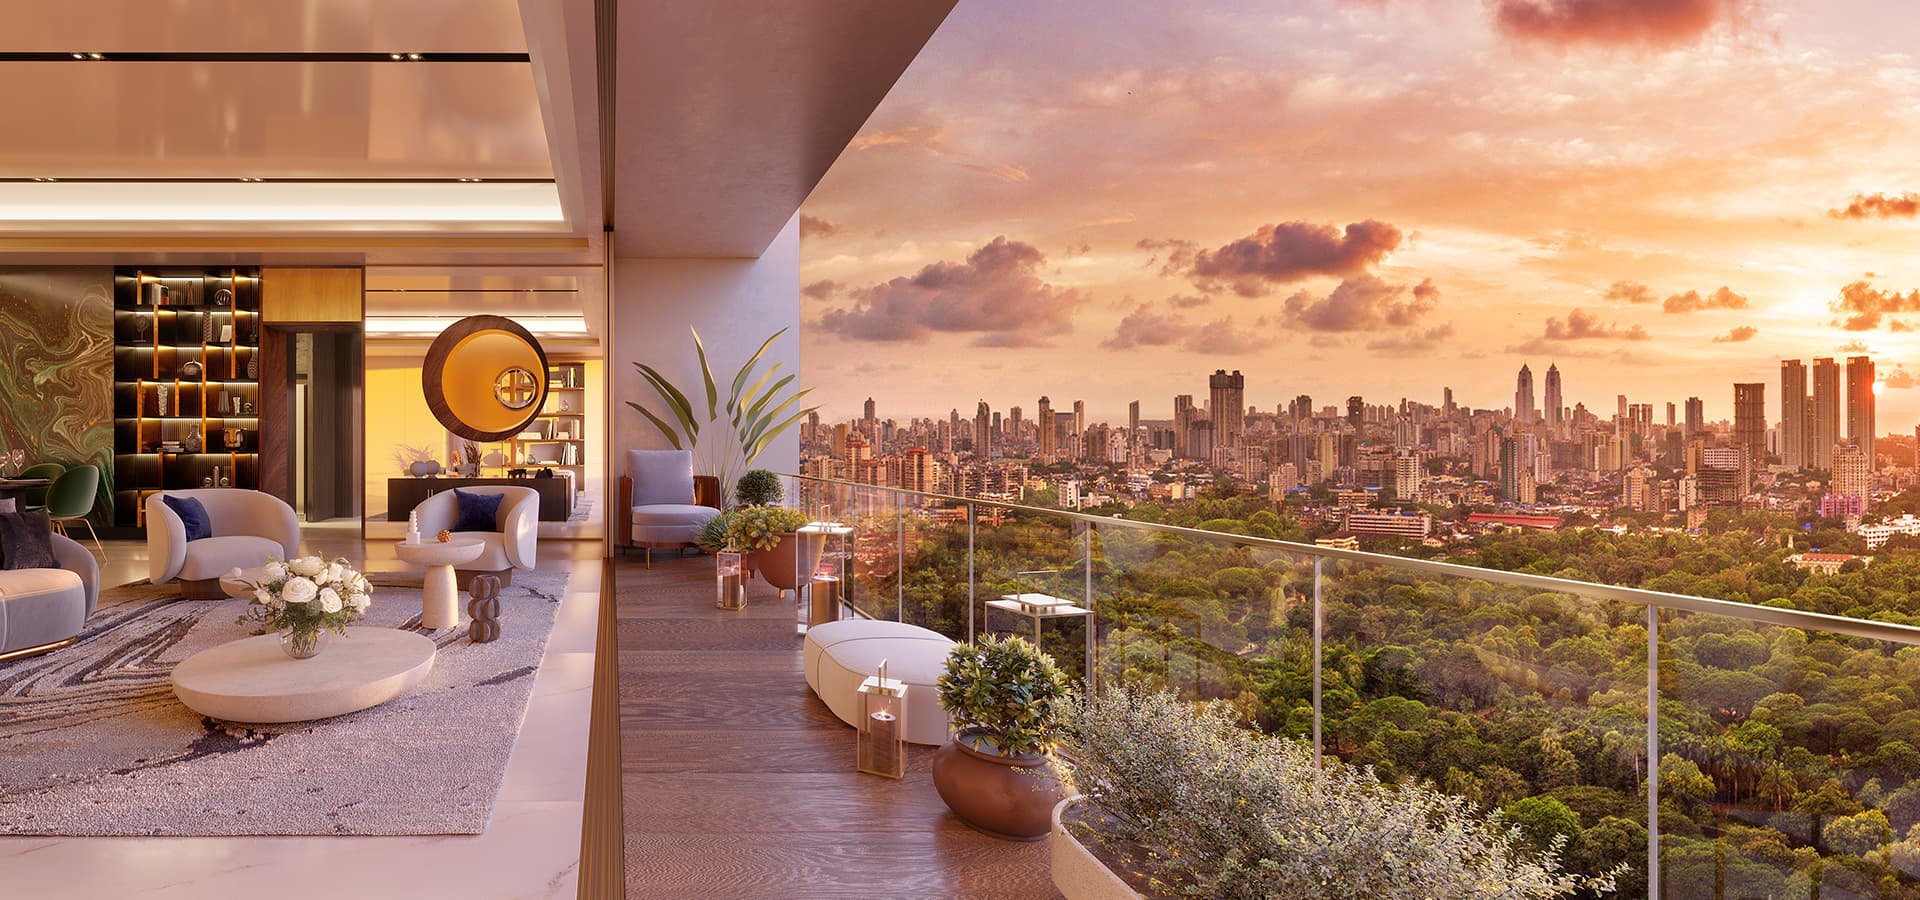 Piramal Realty's presents a lavish living room's interior, defining luxury apartments in Mumbai.